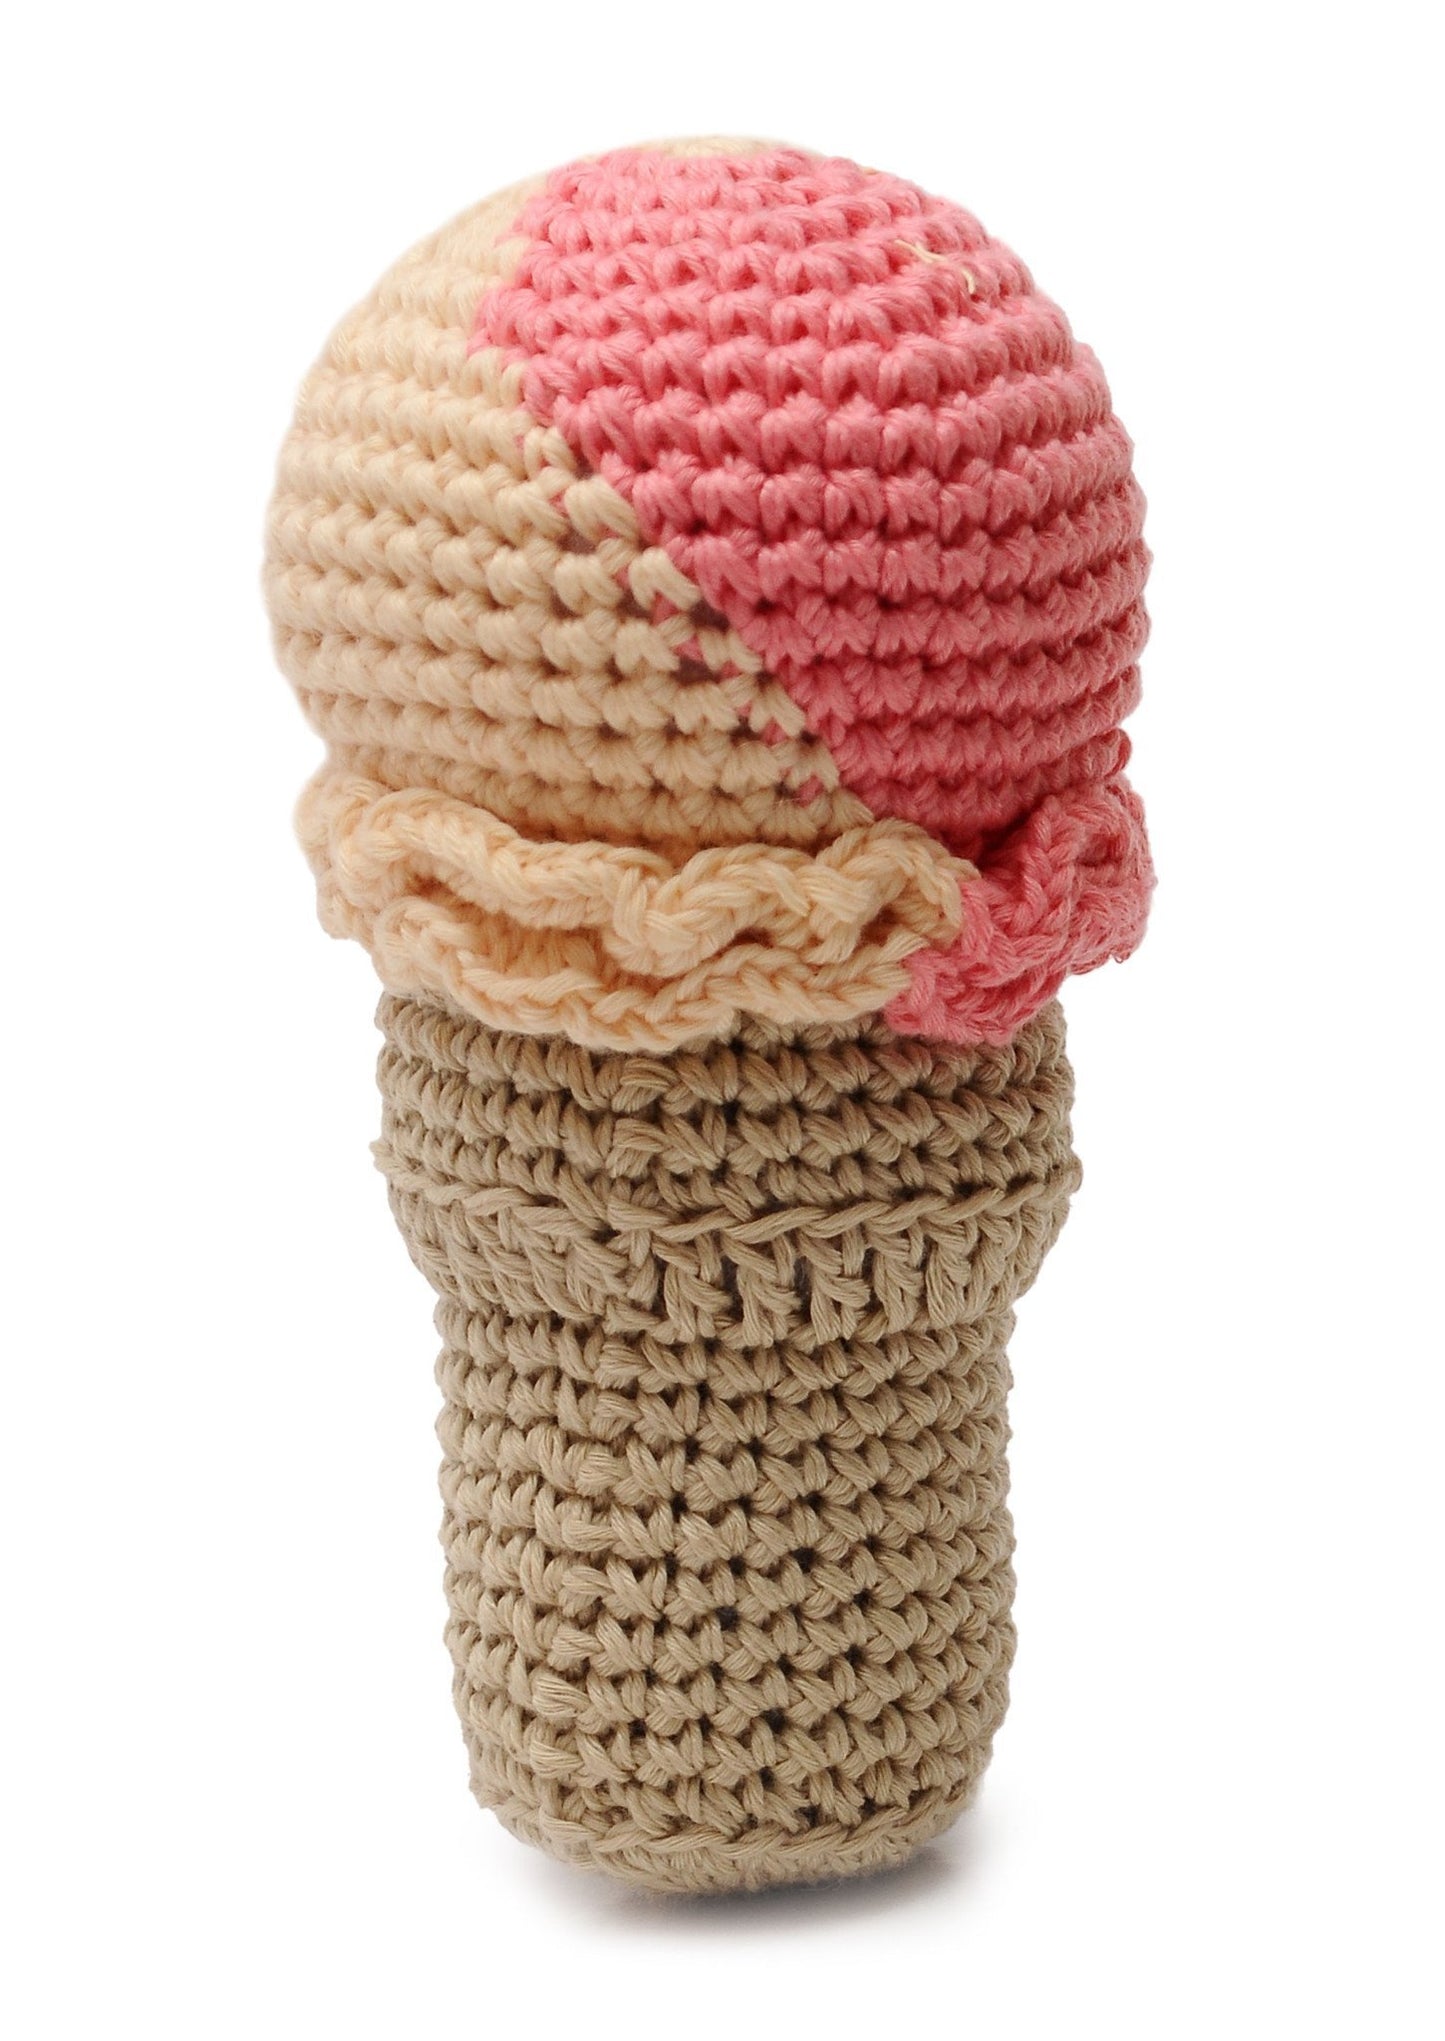 2-Flavor Scoop Ice Cream Handmade Amigurumi Stuffed Toy Knit Crochet Doll VAC